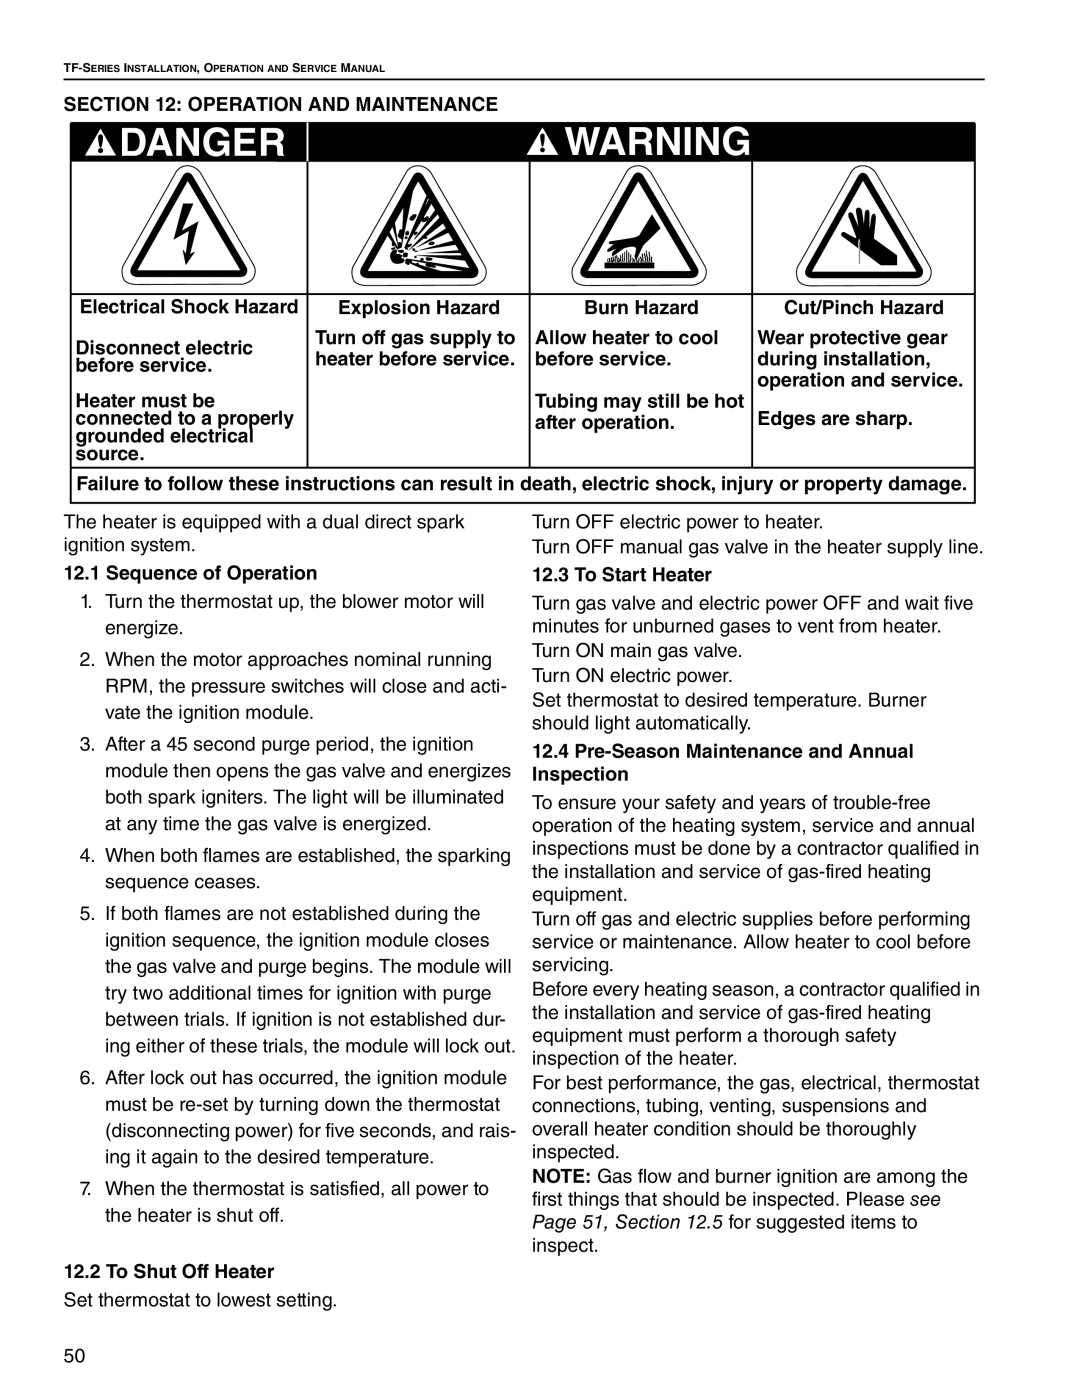 Roberts Gorden TF-350 Danger, Operation And Maintenance, Electrical Shock Hazard, Explosion Hazard, Burn Hazard, source 